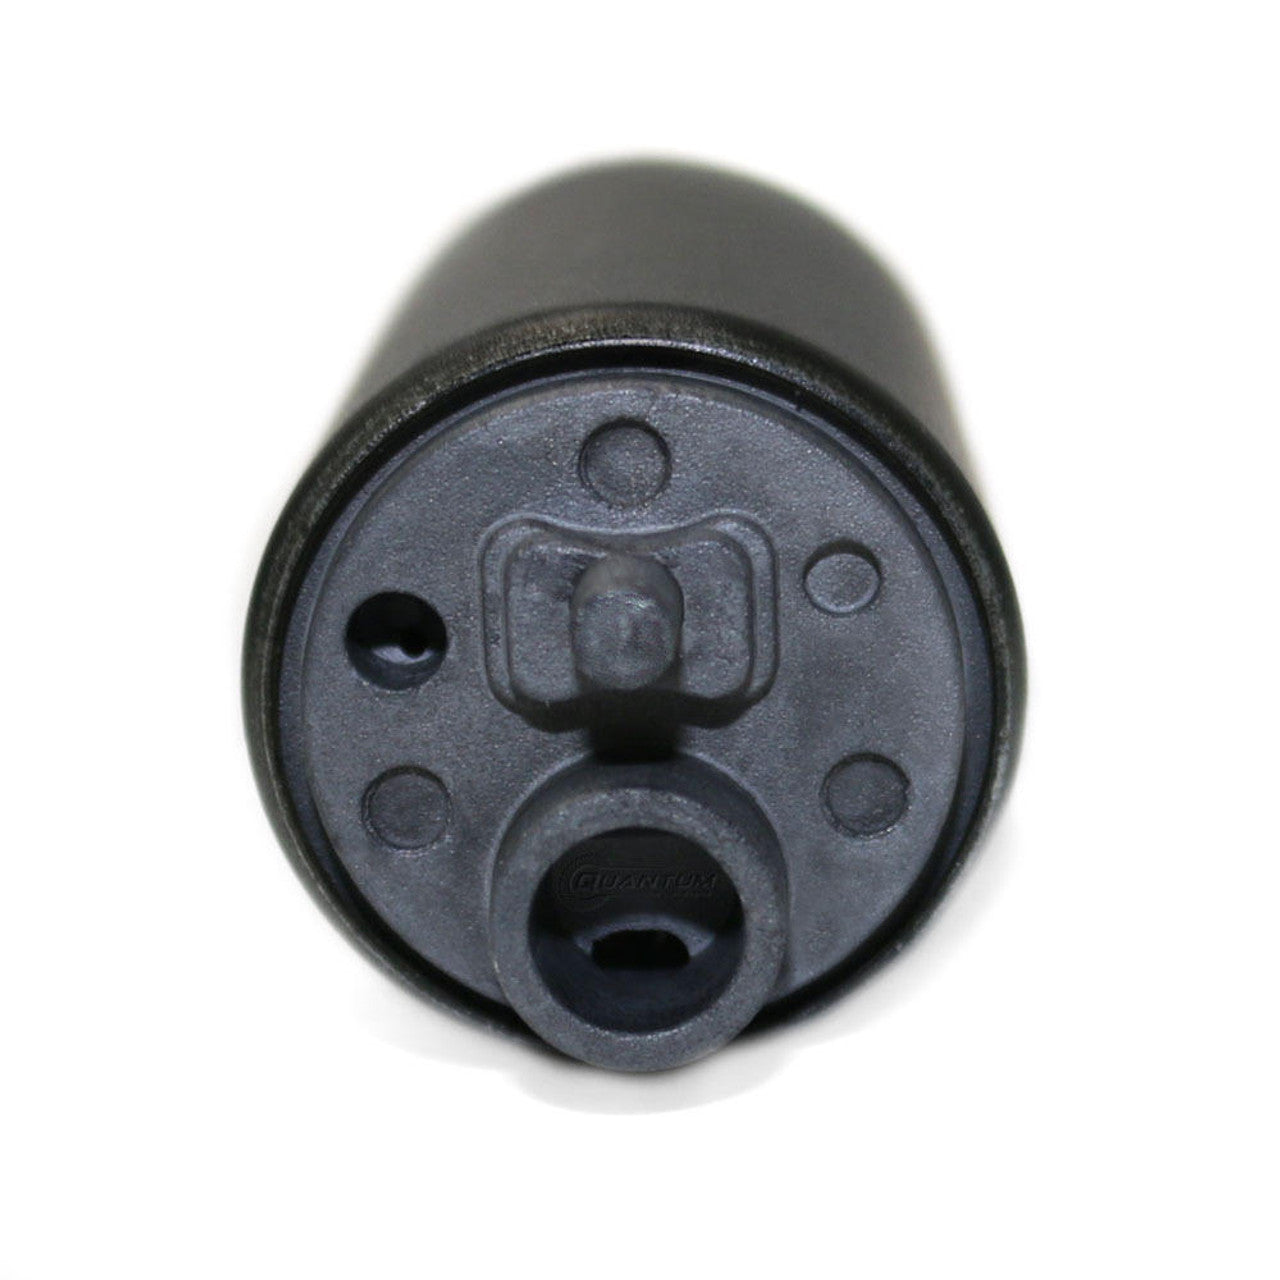 EFI Fuel Pump w/ Regulator, Tank Seal, Fuel Filter, Strainer